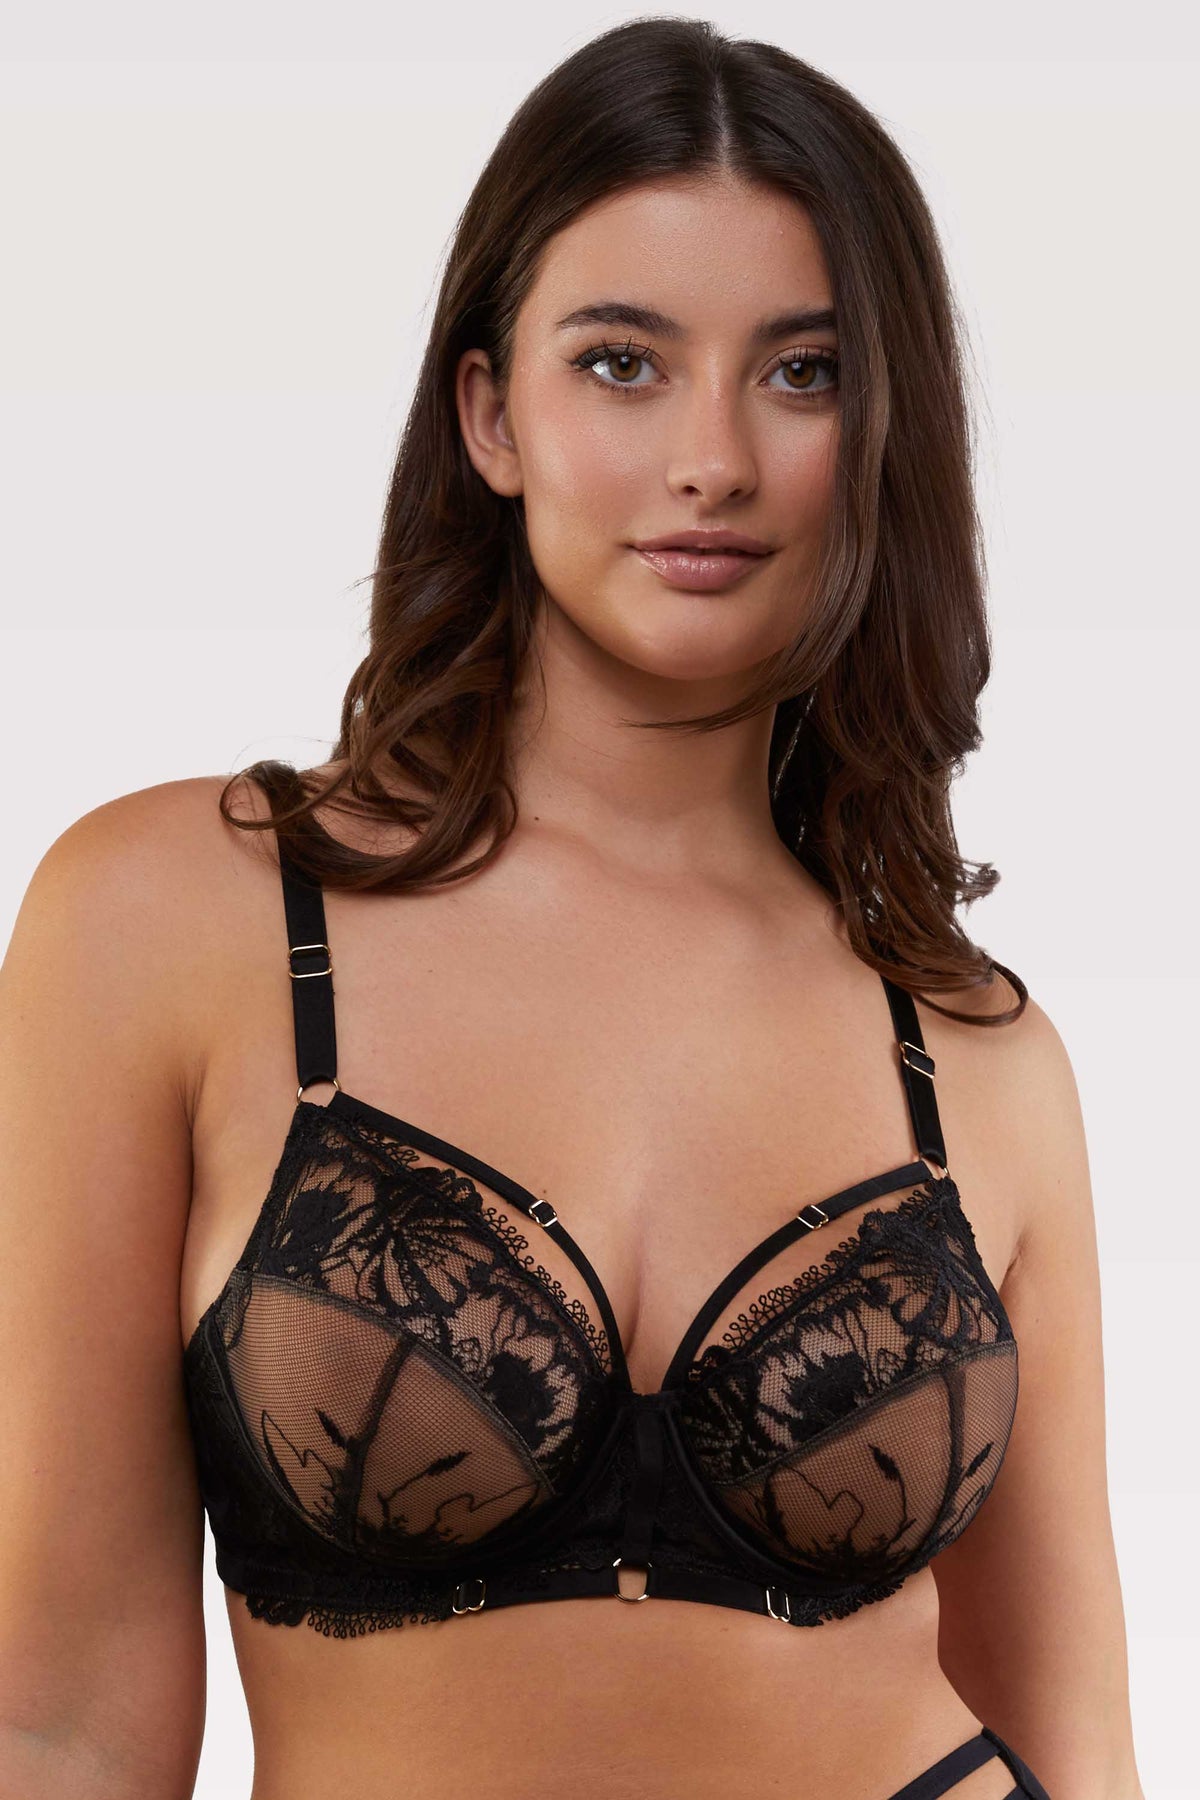 model wears black lace bra with straps